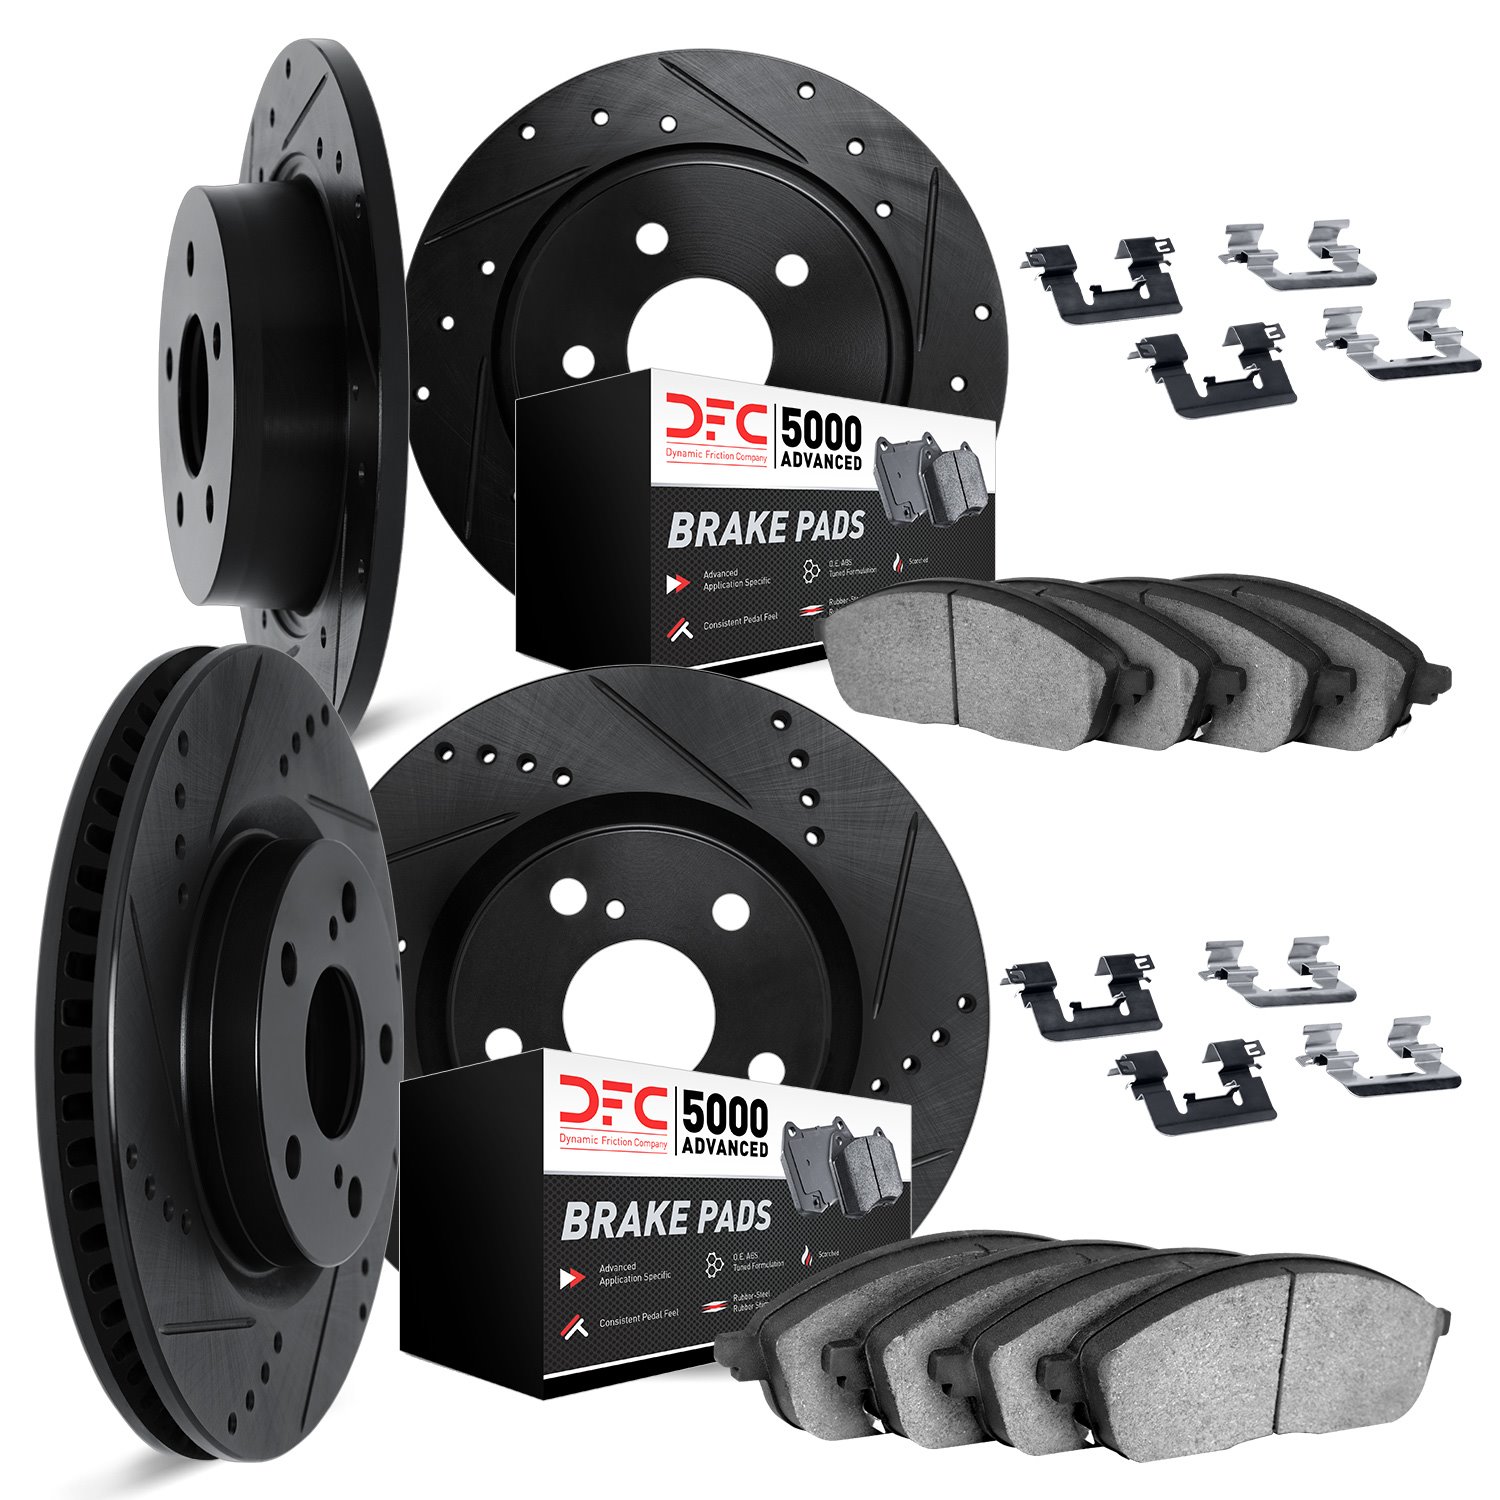 8514-54475 Drilled/Slotted Brake Rotors w/5000 Advanced Brake Pads Kit & Hardware [Black], 2015-2019 Ford/Lincoln/Mercury/Mazda,